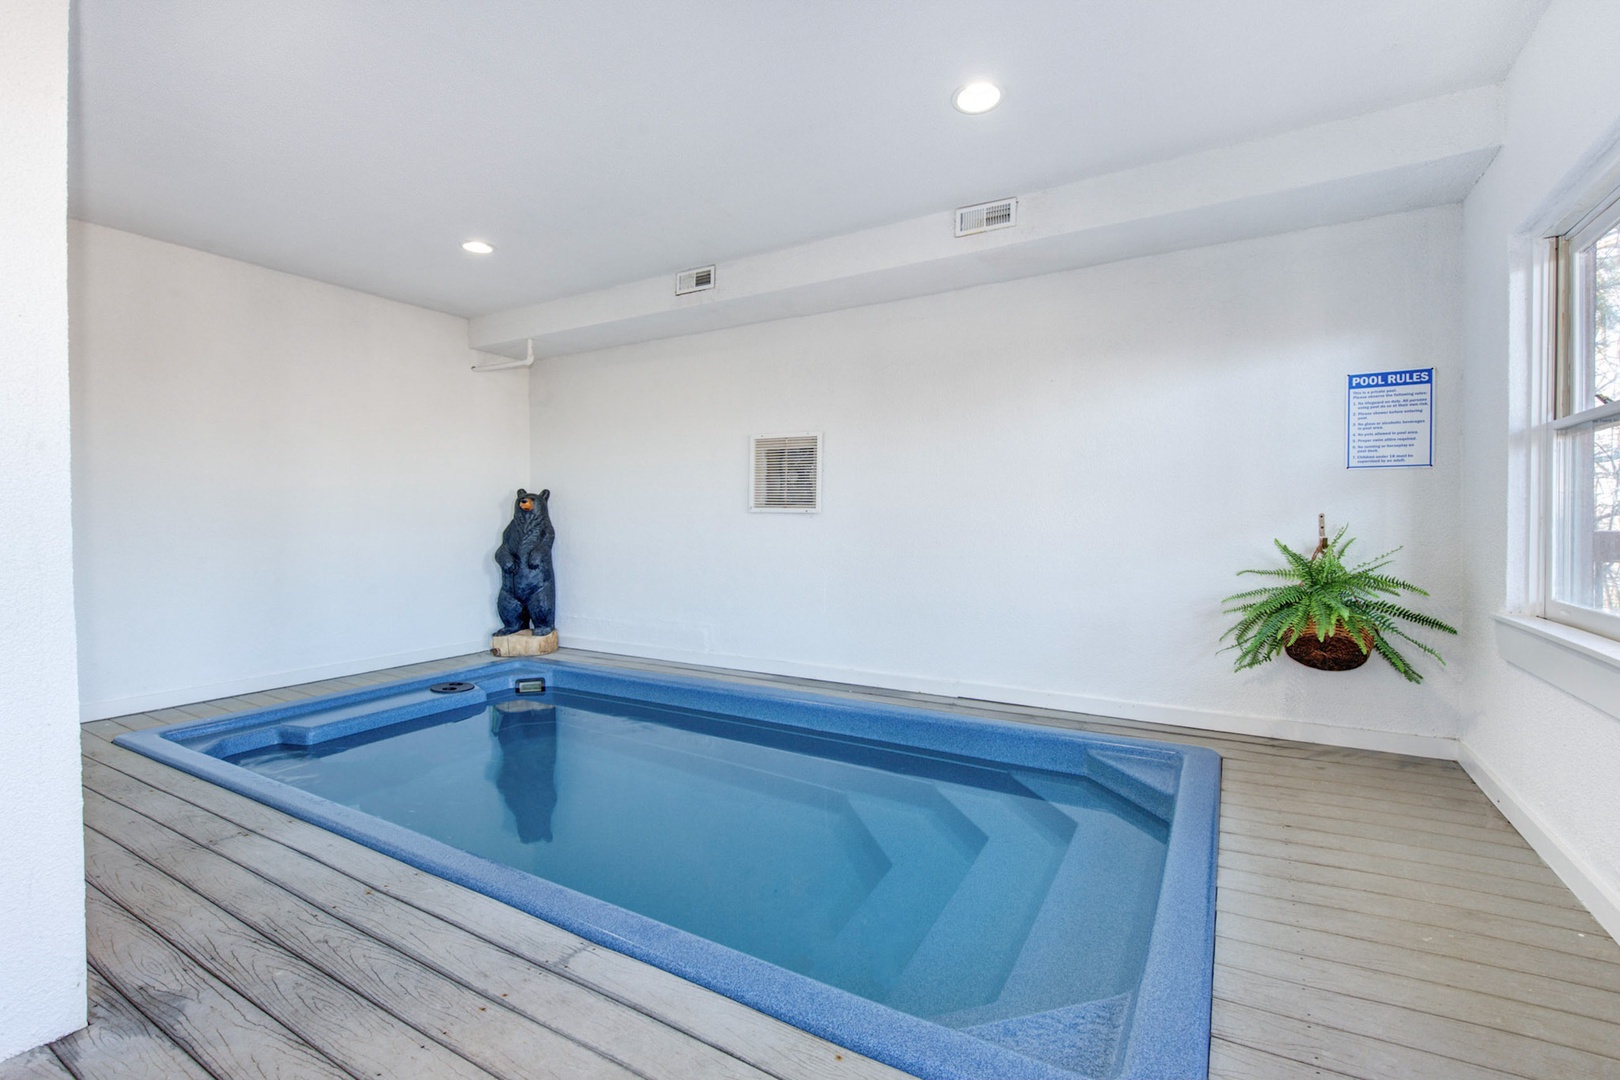 Make a splash in the sparkling lower-level indoor pool!